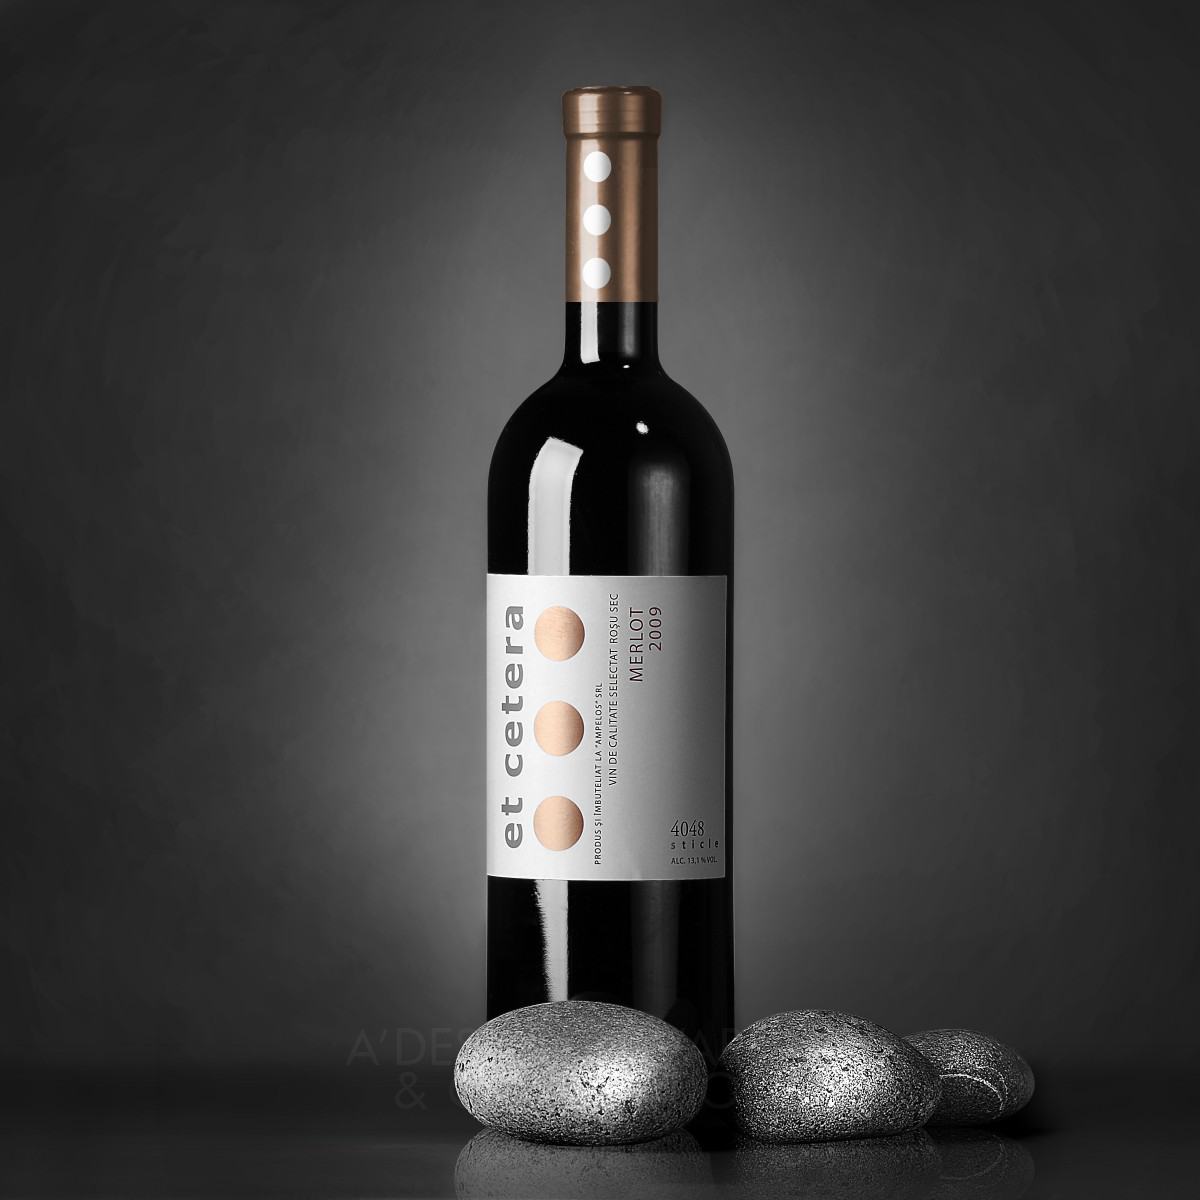 Et Cetera Merlot Exclusive quality wine by Valerii Sumilov Golden Packaging Design Award Winner 2014 